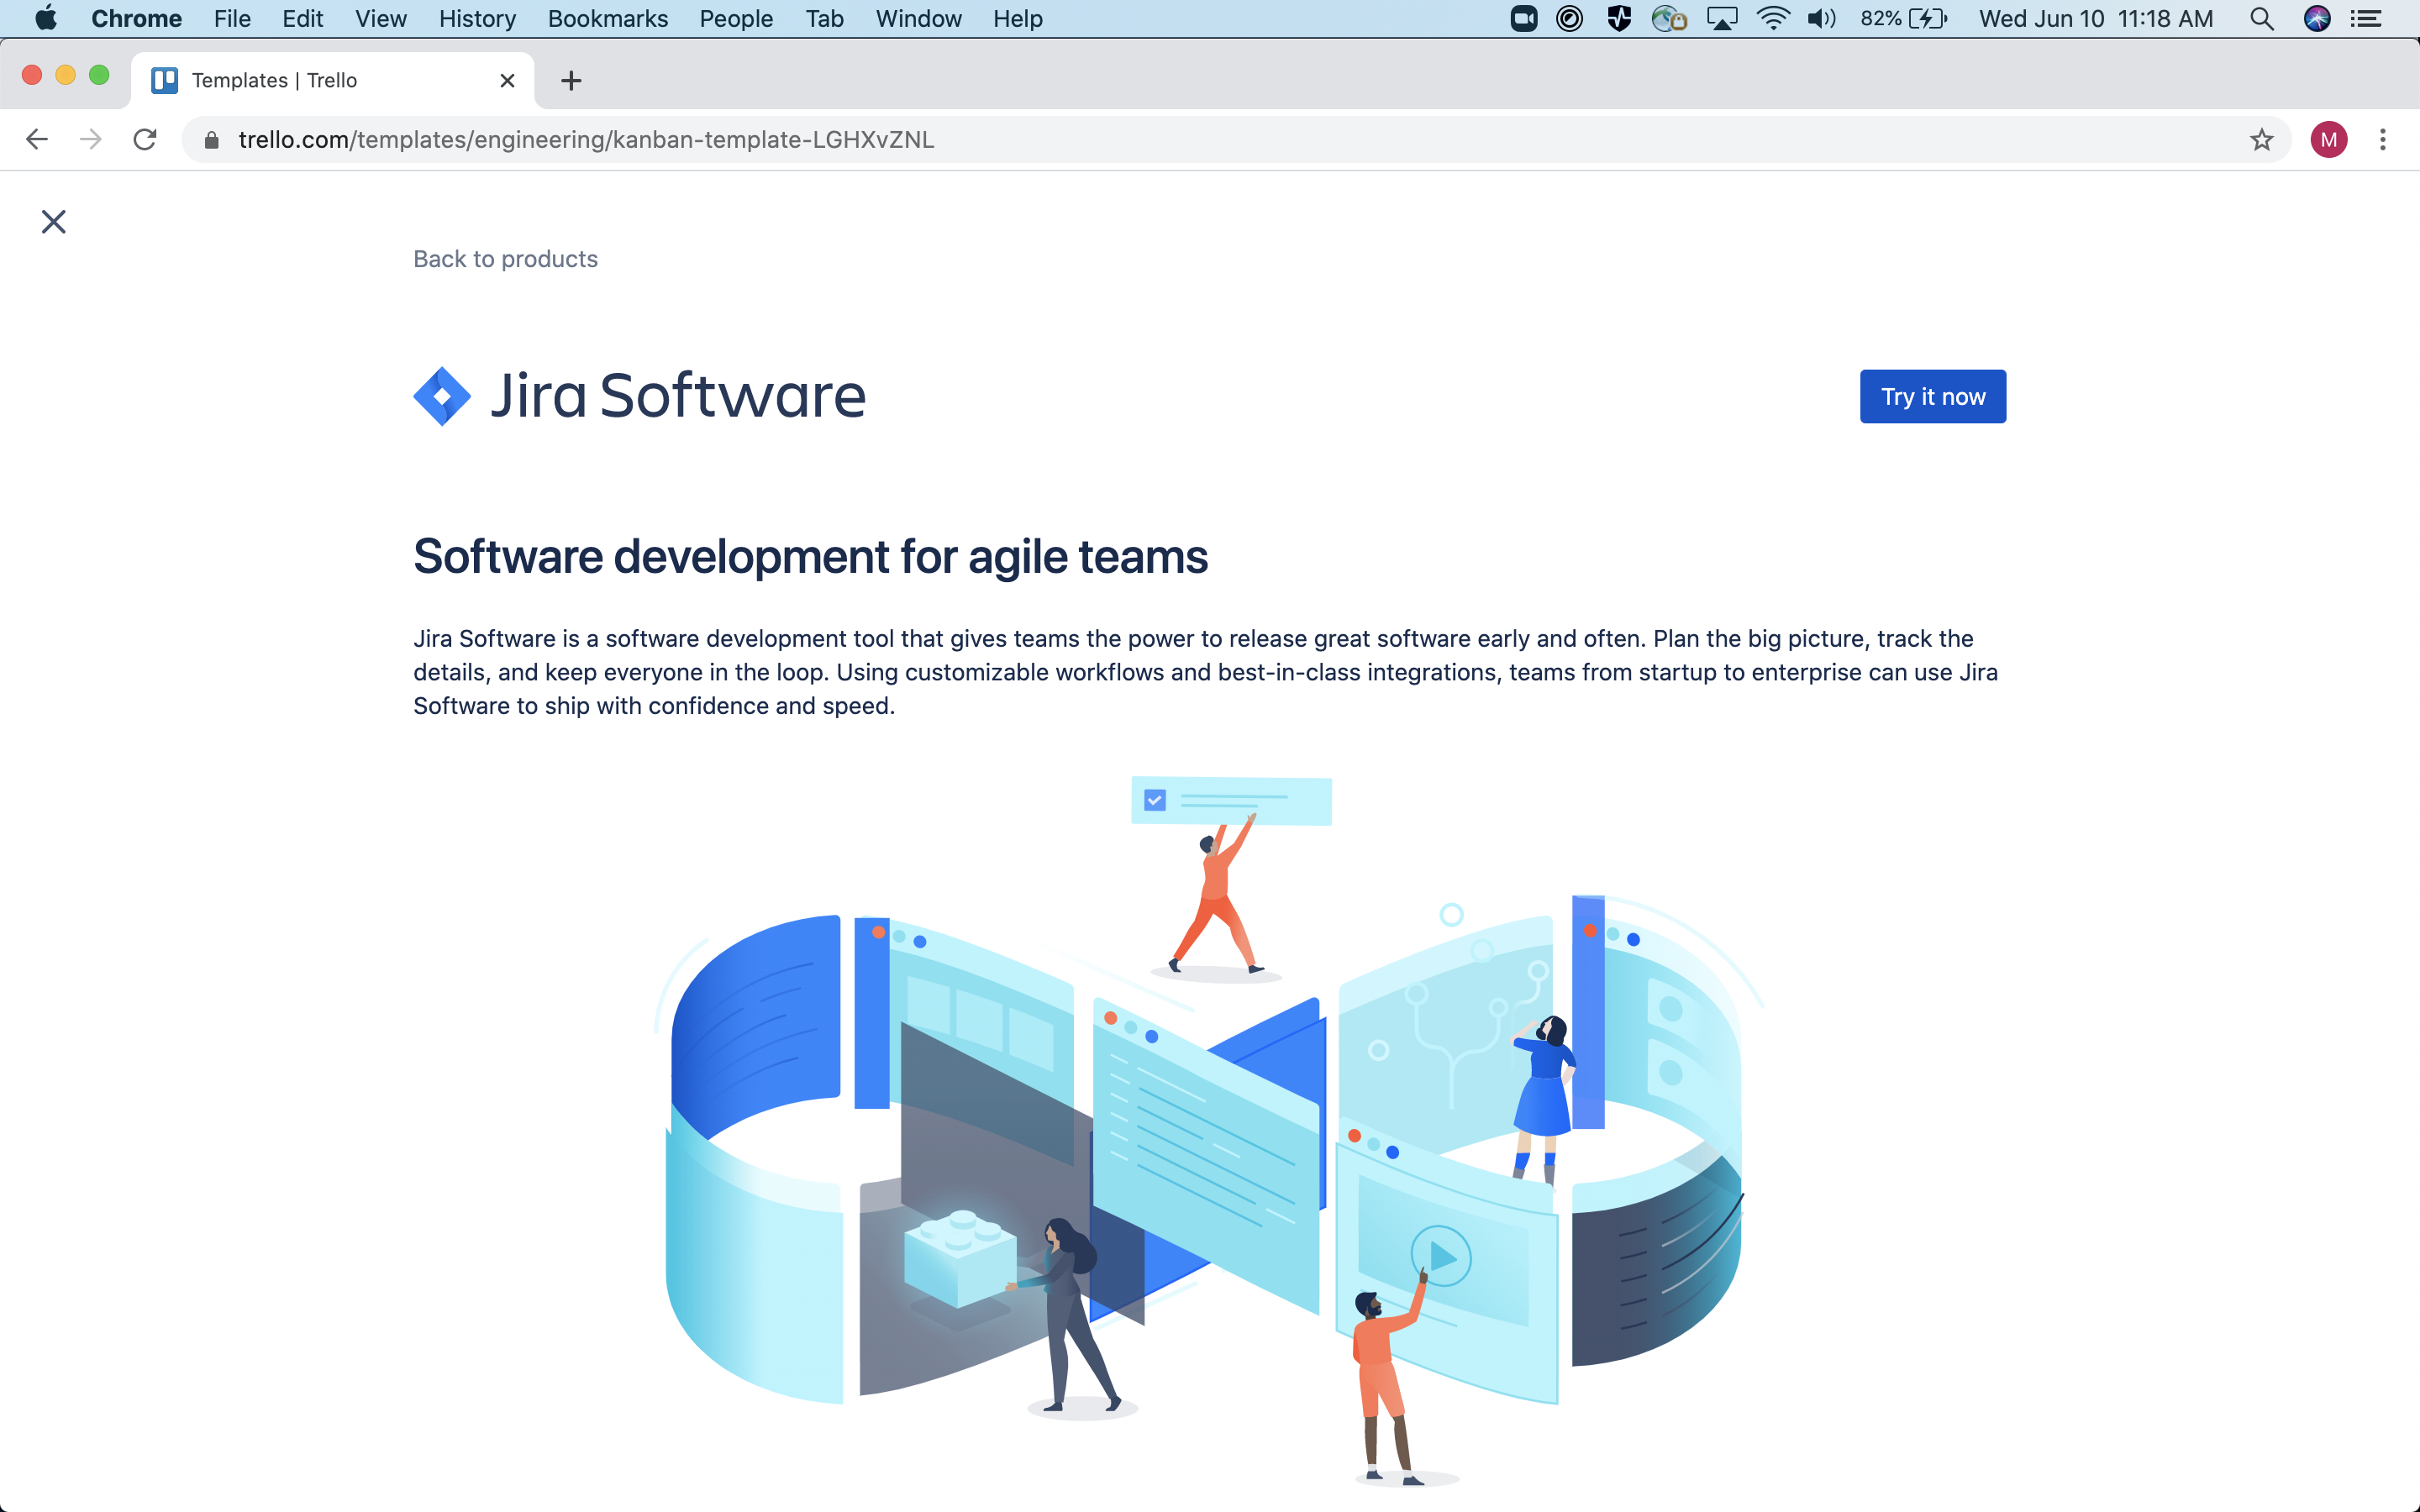 jira software product description screenshot